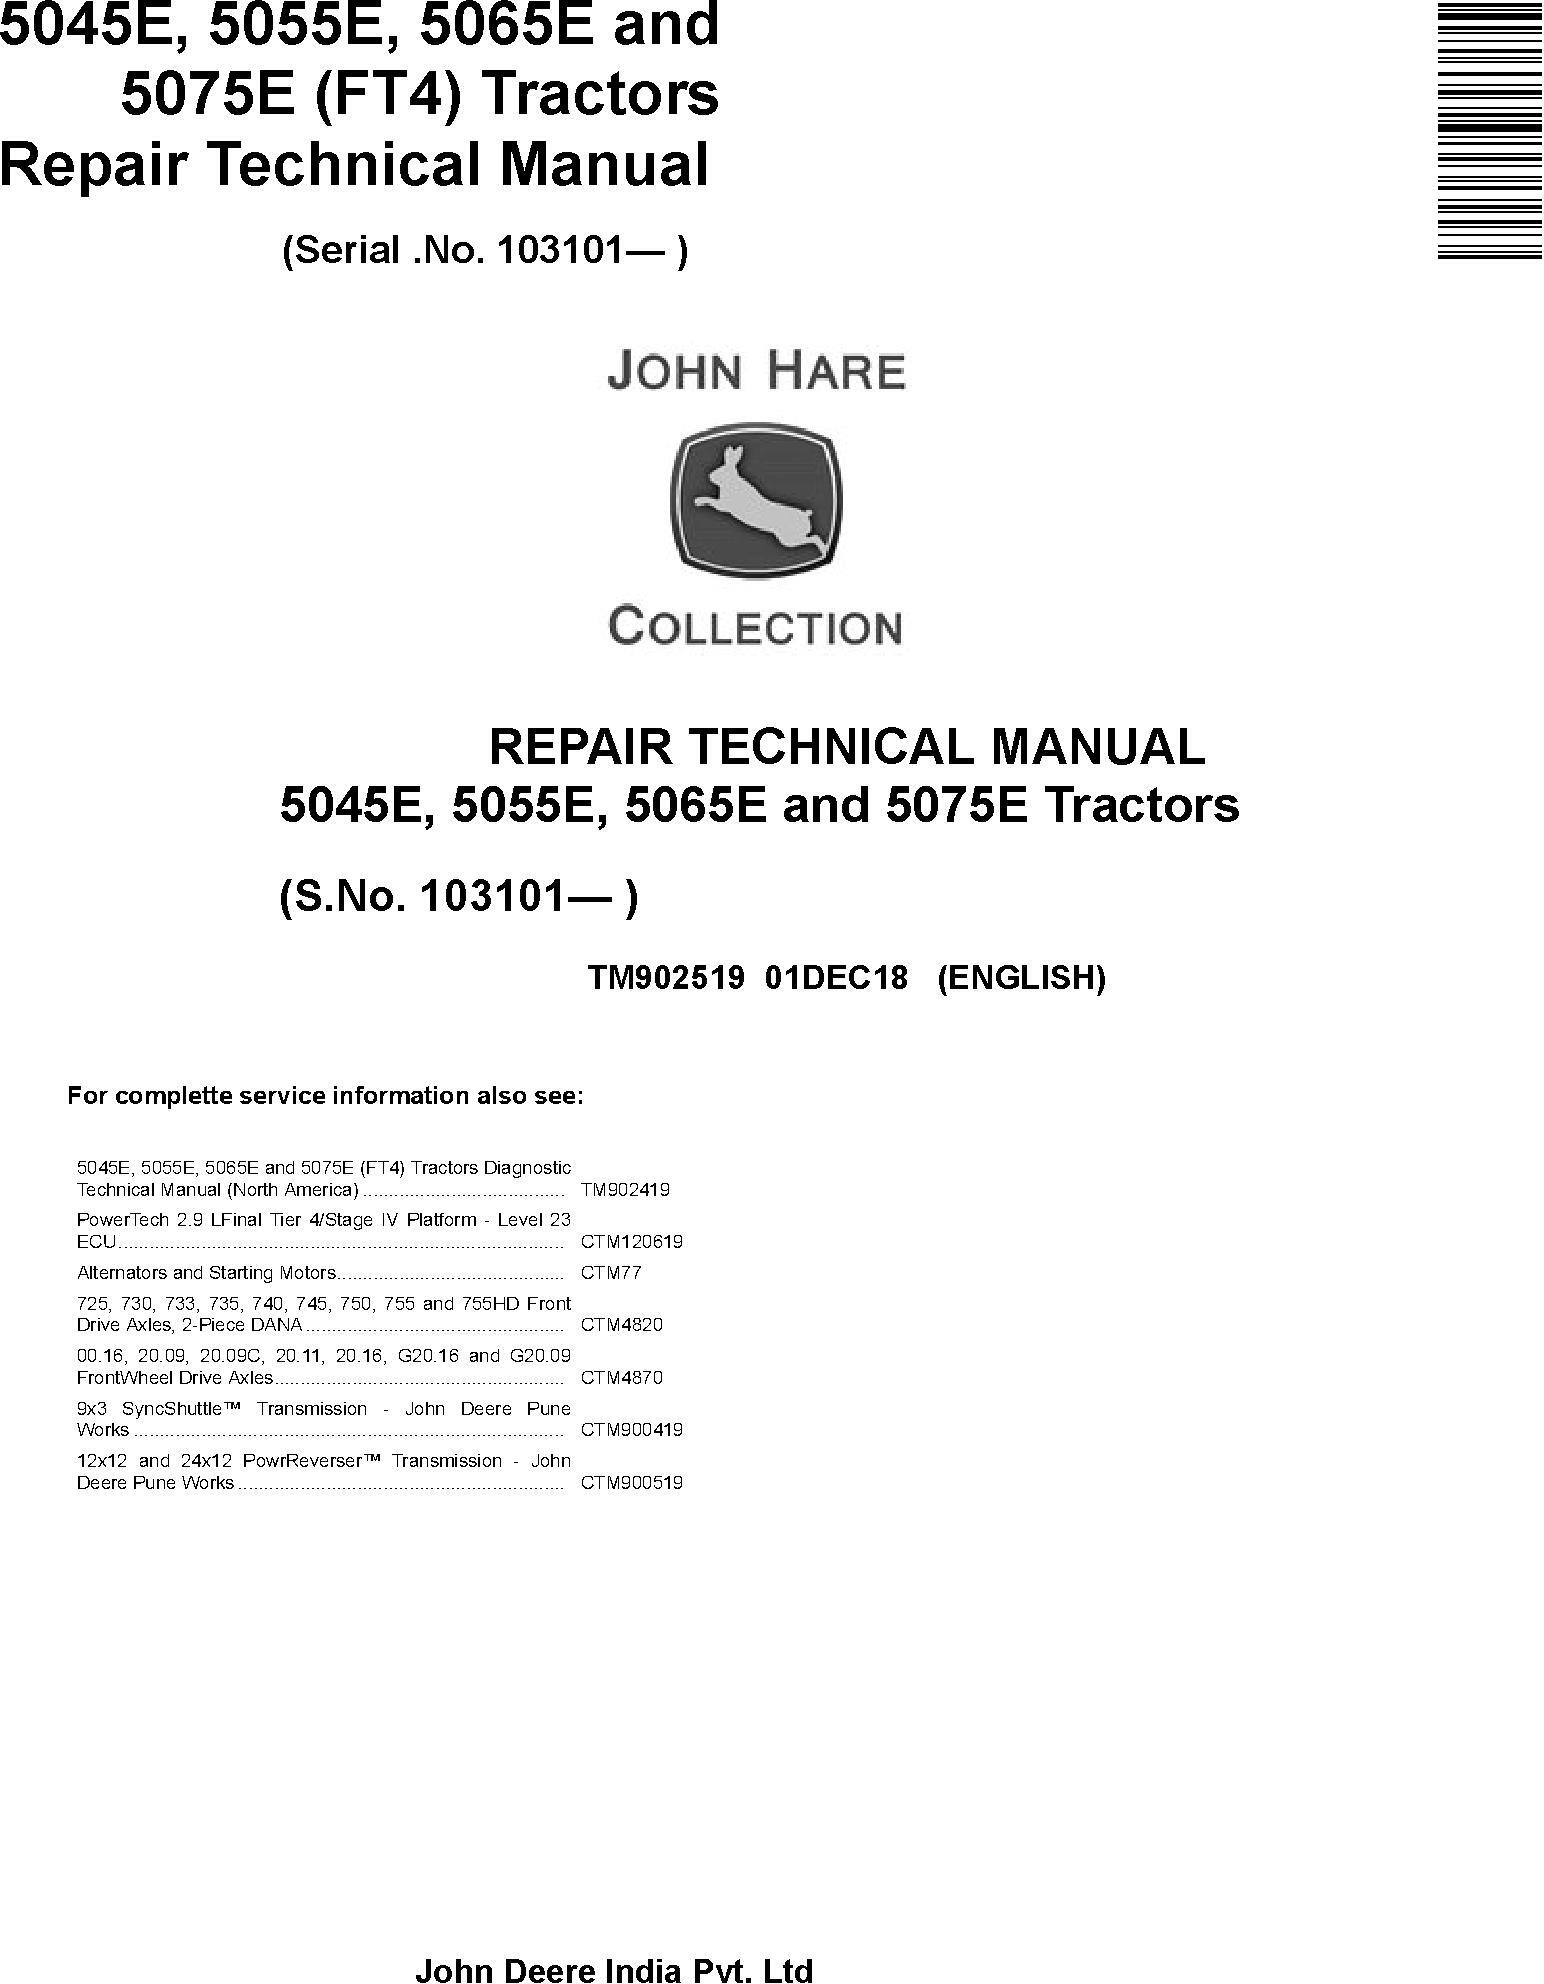 John Deere 5045E 5055E 5065E 5075E Tractor Repair Technical Manual TM902519